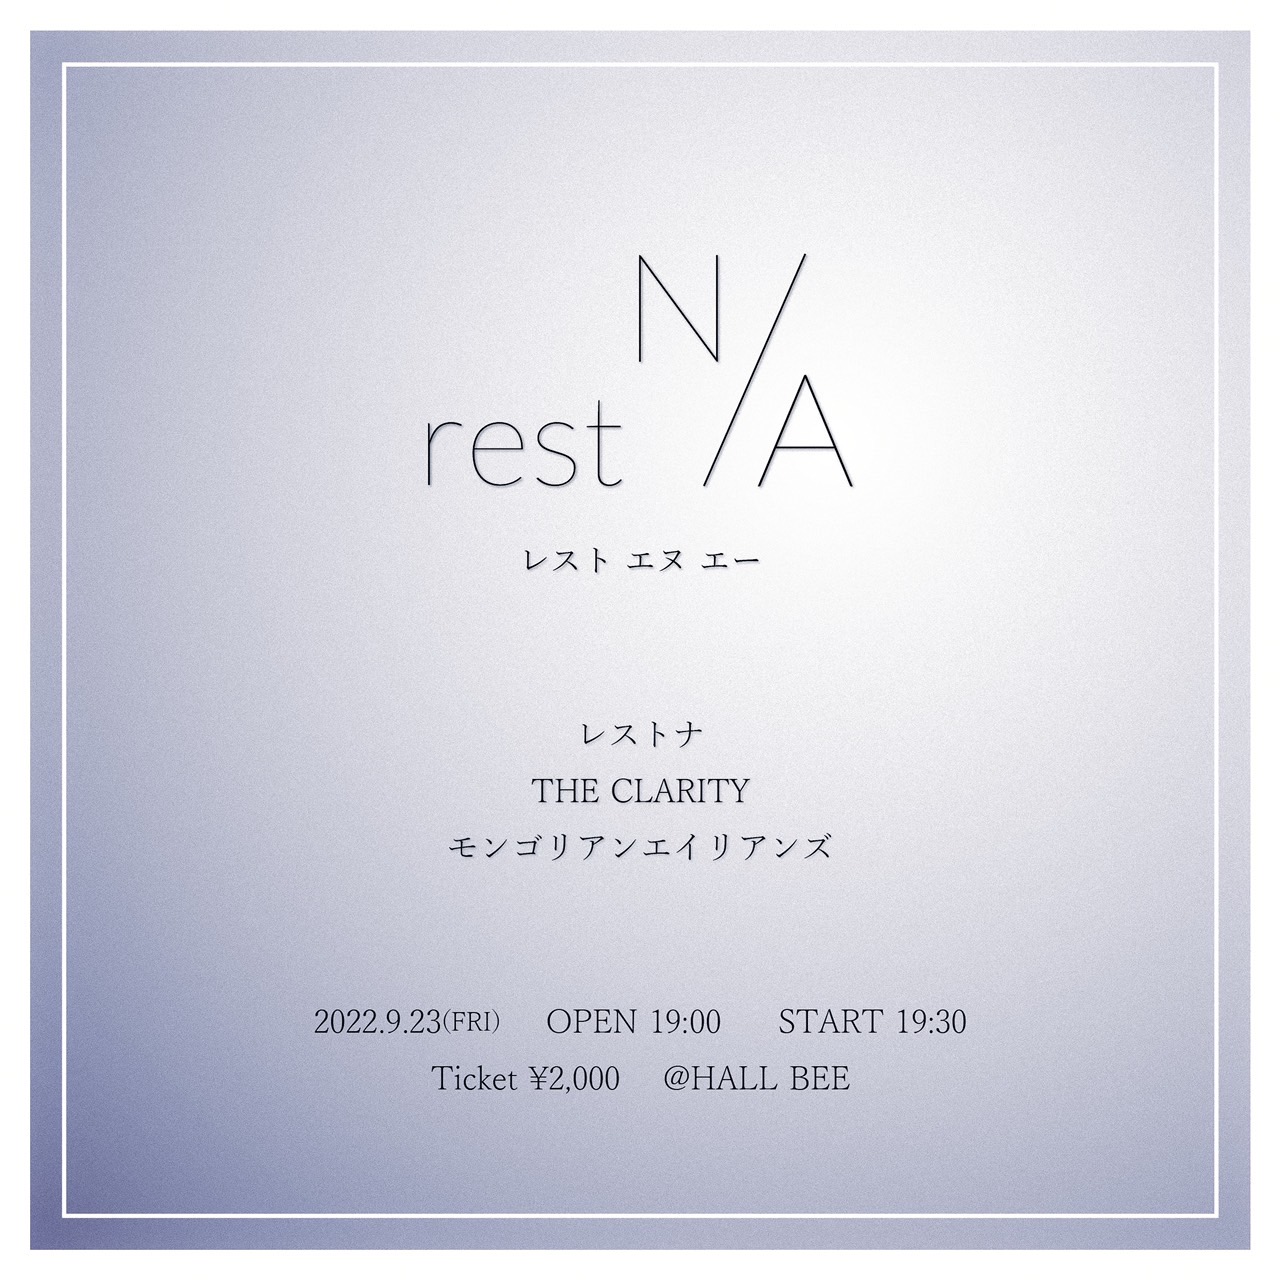 restN/A